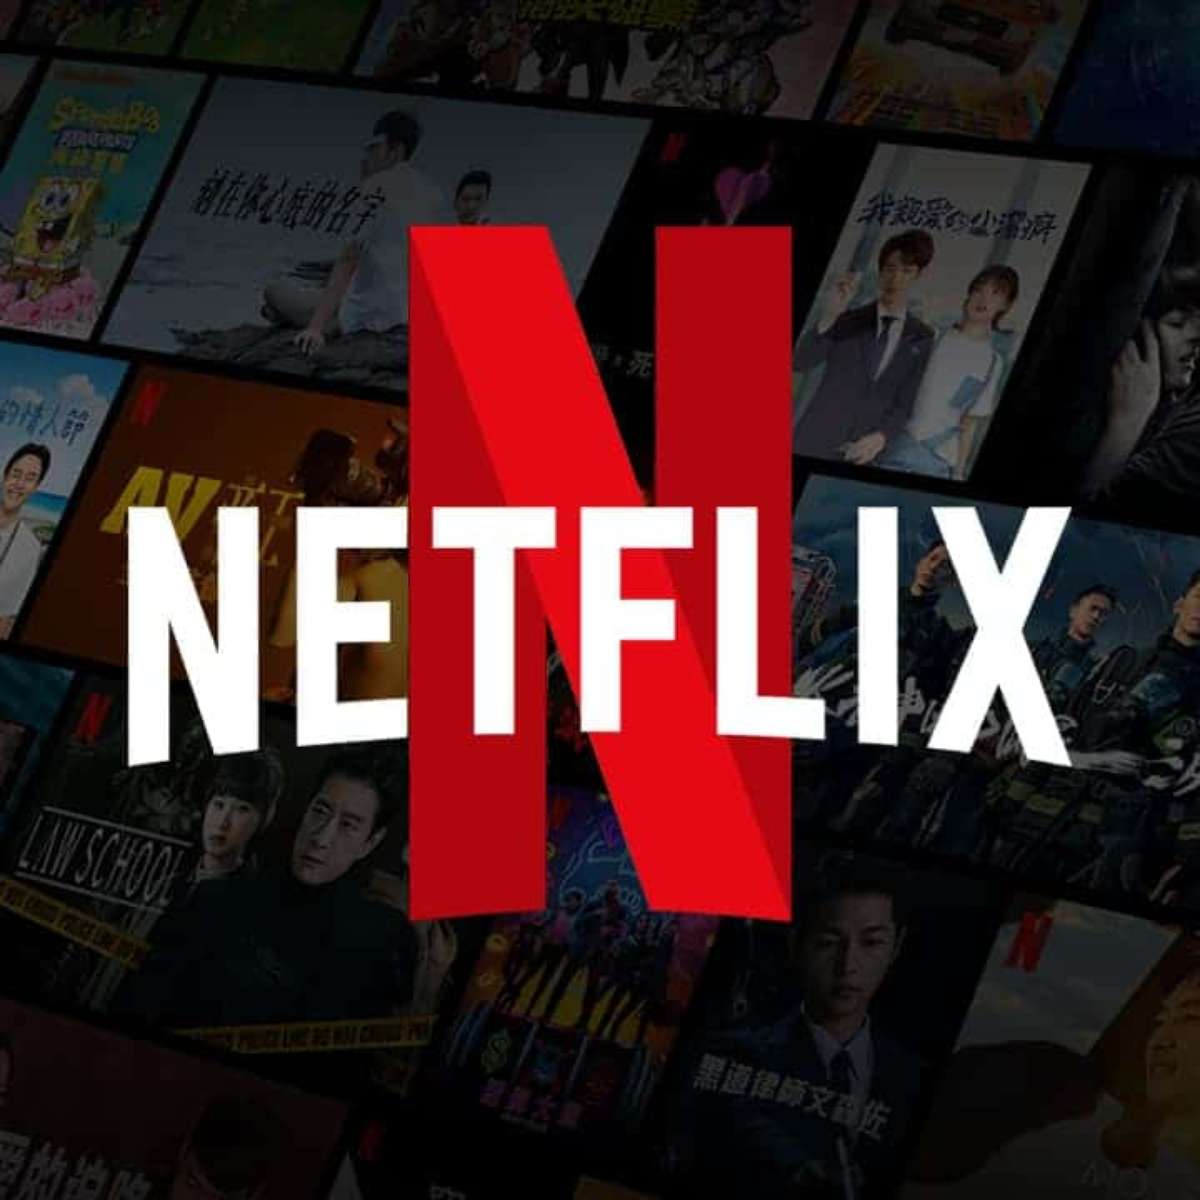 Procon-SP notifica Netflix após cobrança extra por